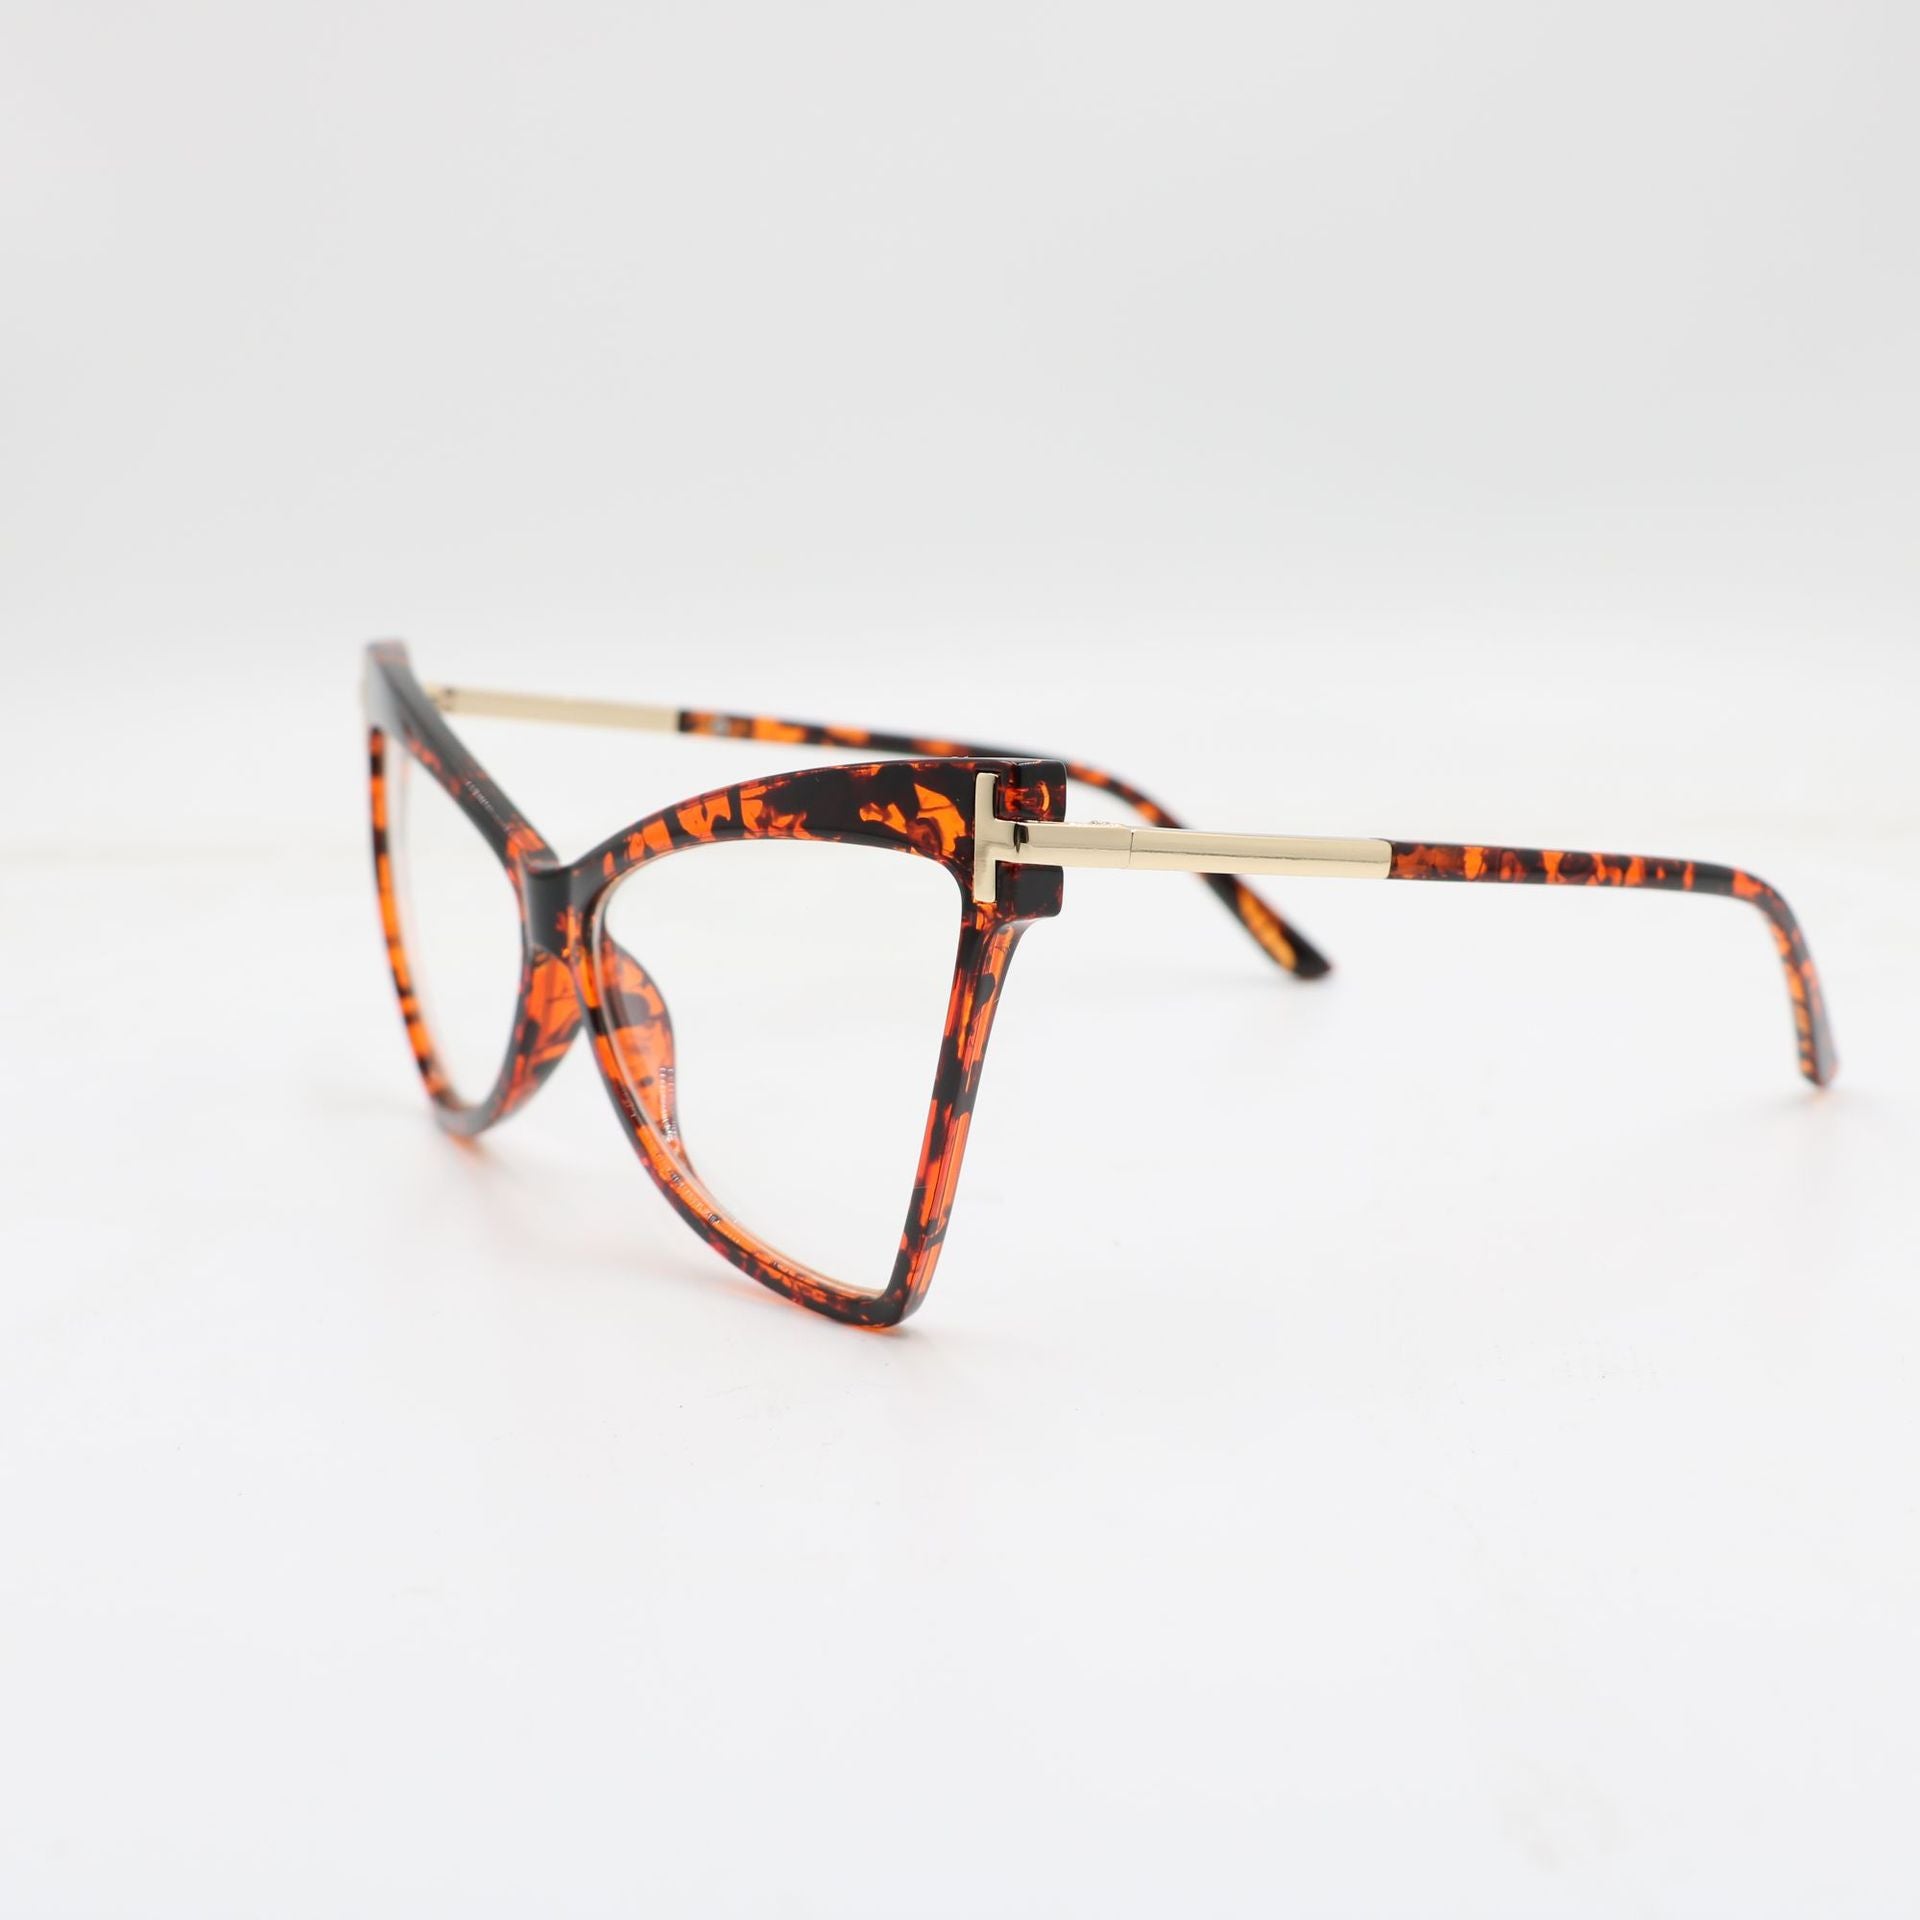 Chic T-Shaped Cat Eye Anti Blue Light Sunglasses for Women | ULZZANG BELLA